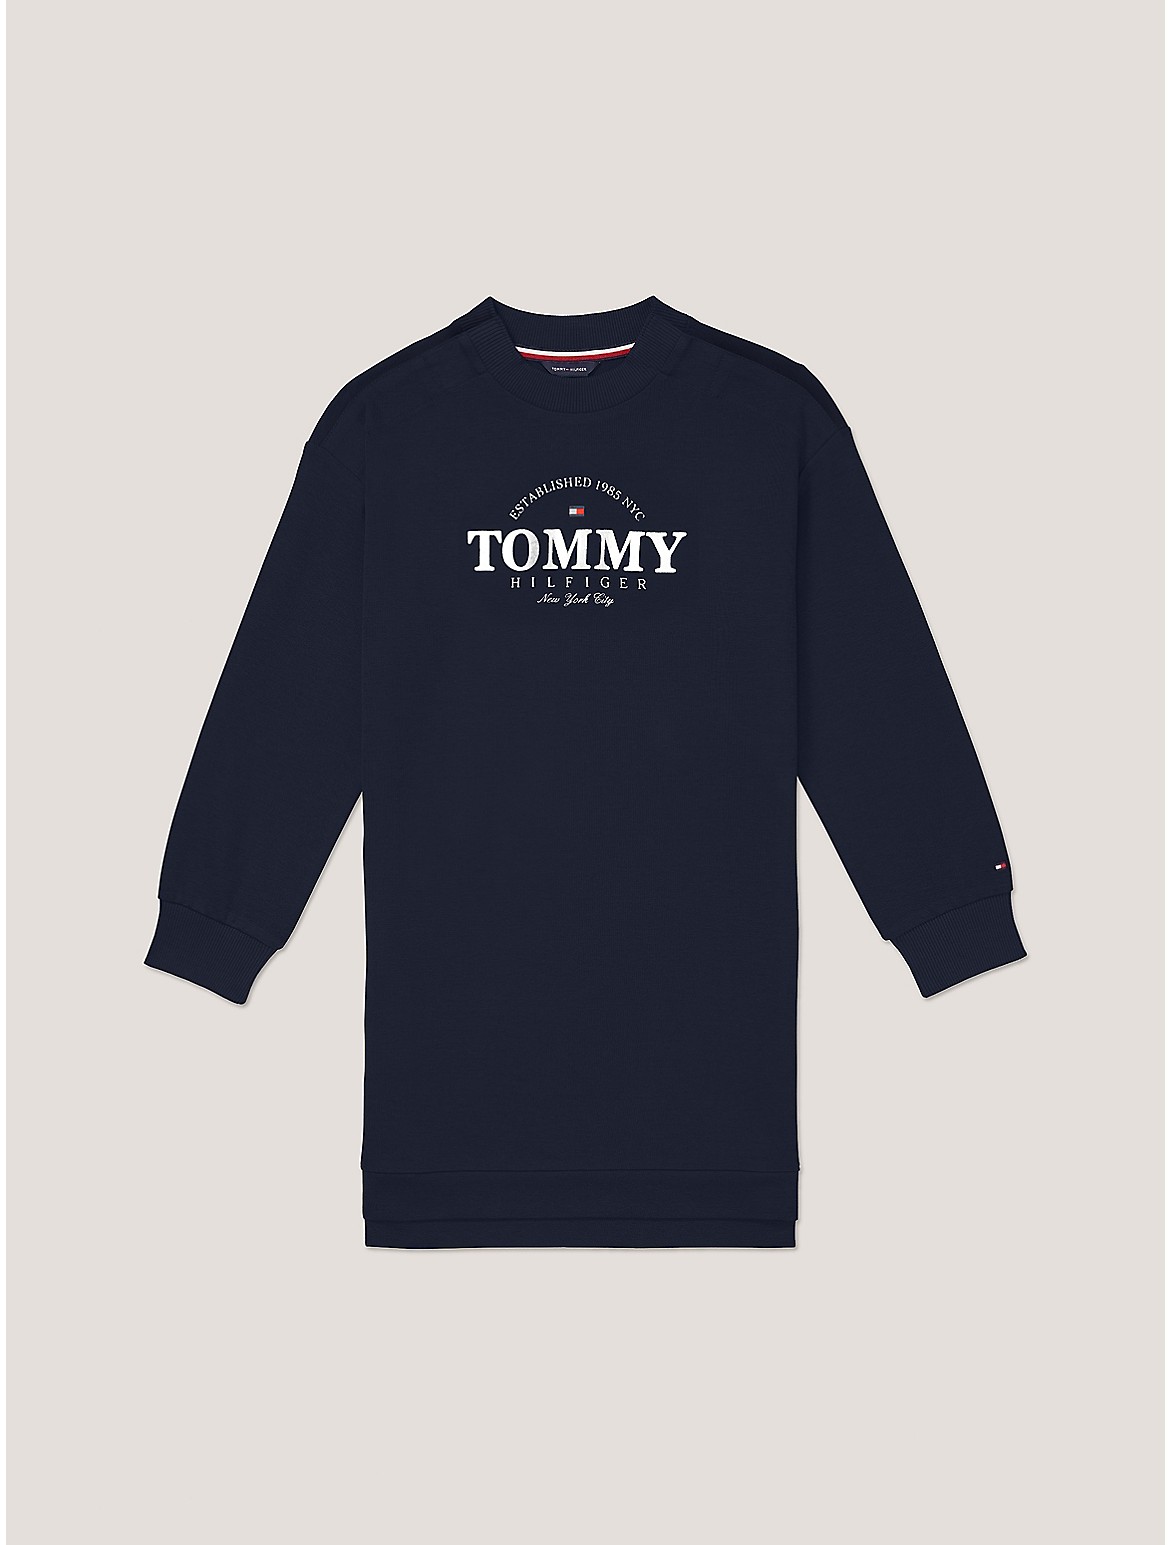 Tommy Hilfiger Girls' Kids' Tommy Shimmer Sweater Dress